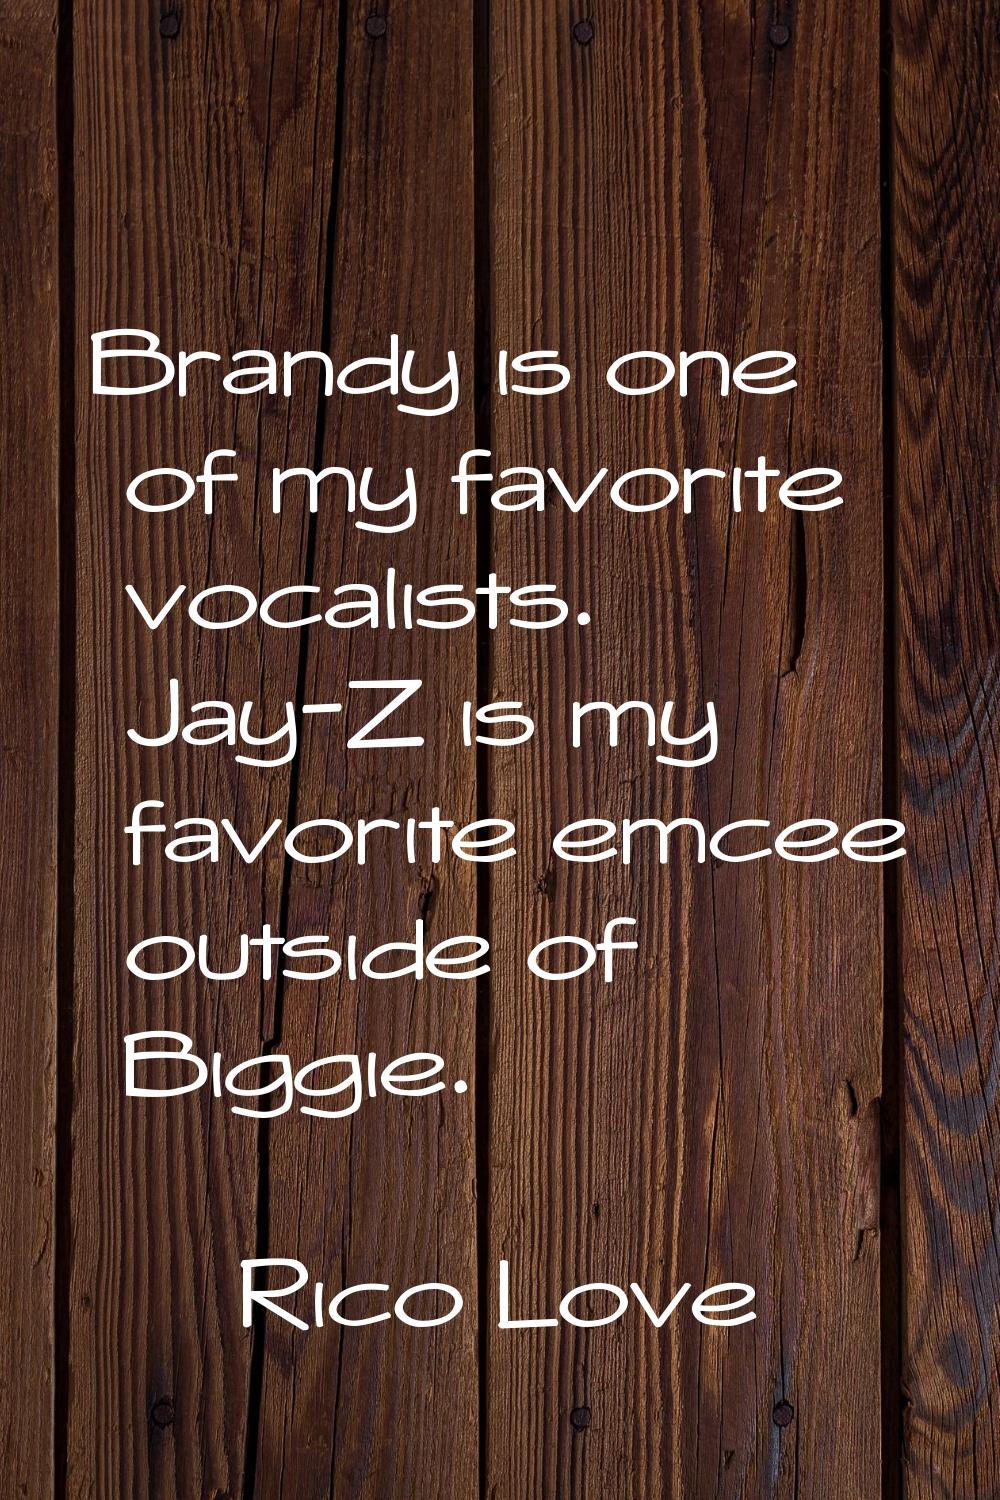 Brandy is one of my favorite vocalists. Jay-Z is my favorite emcee outside of Biggie.